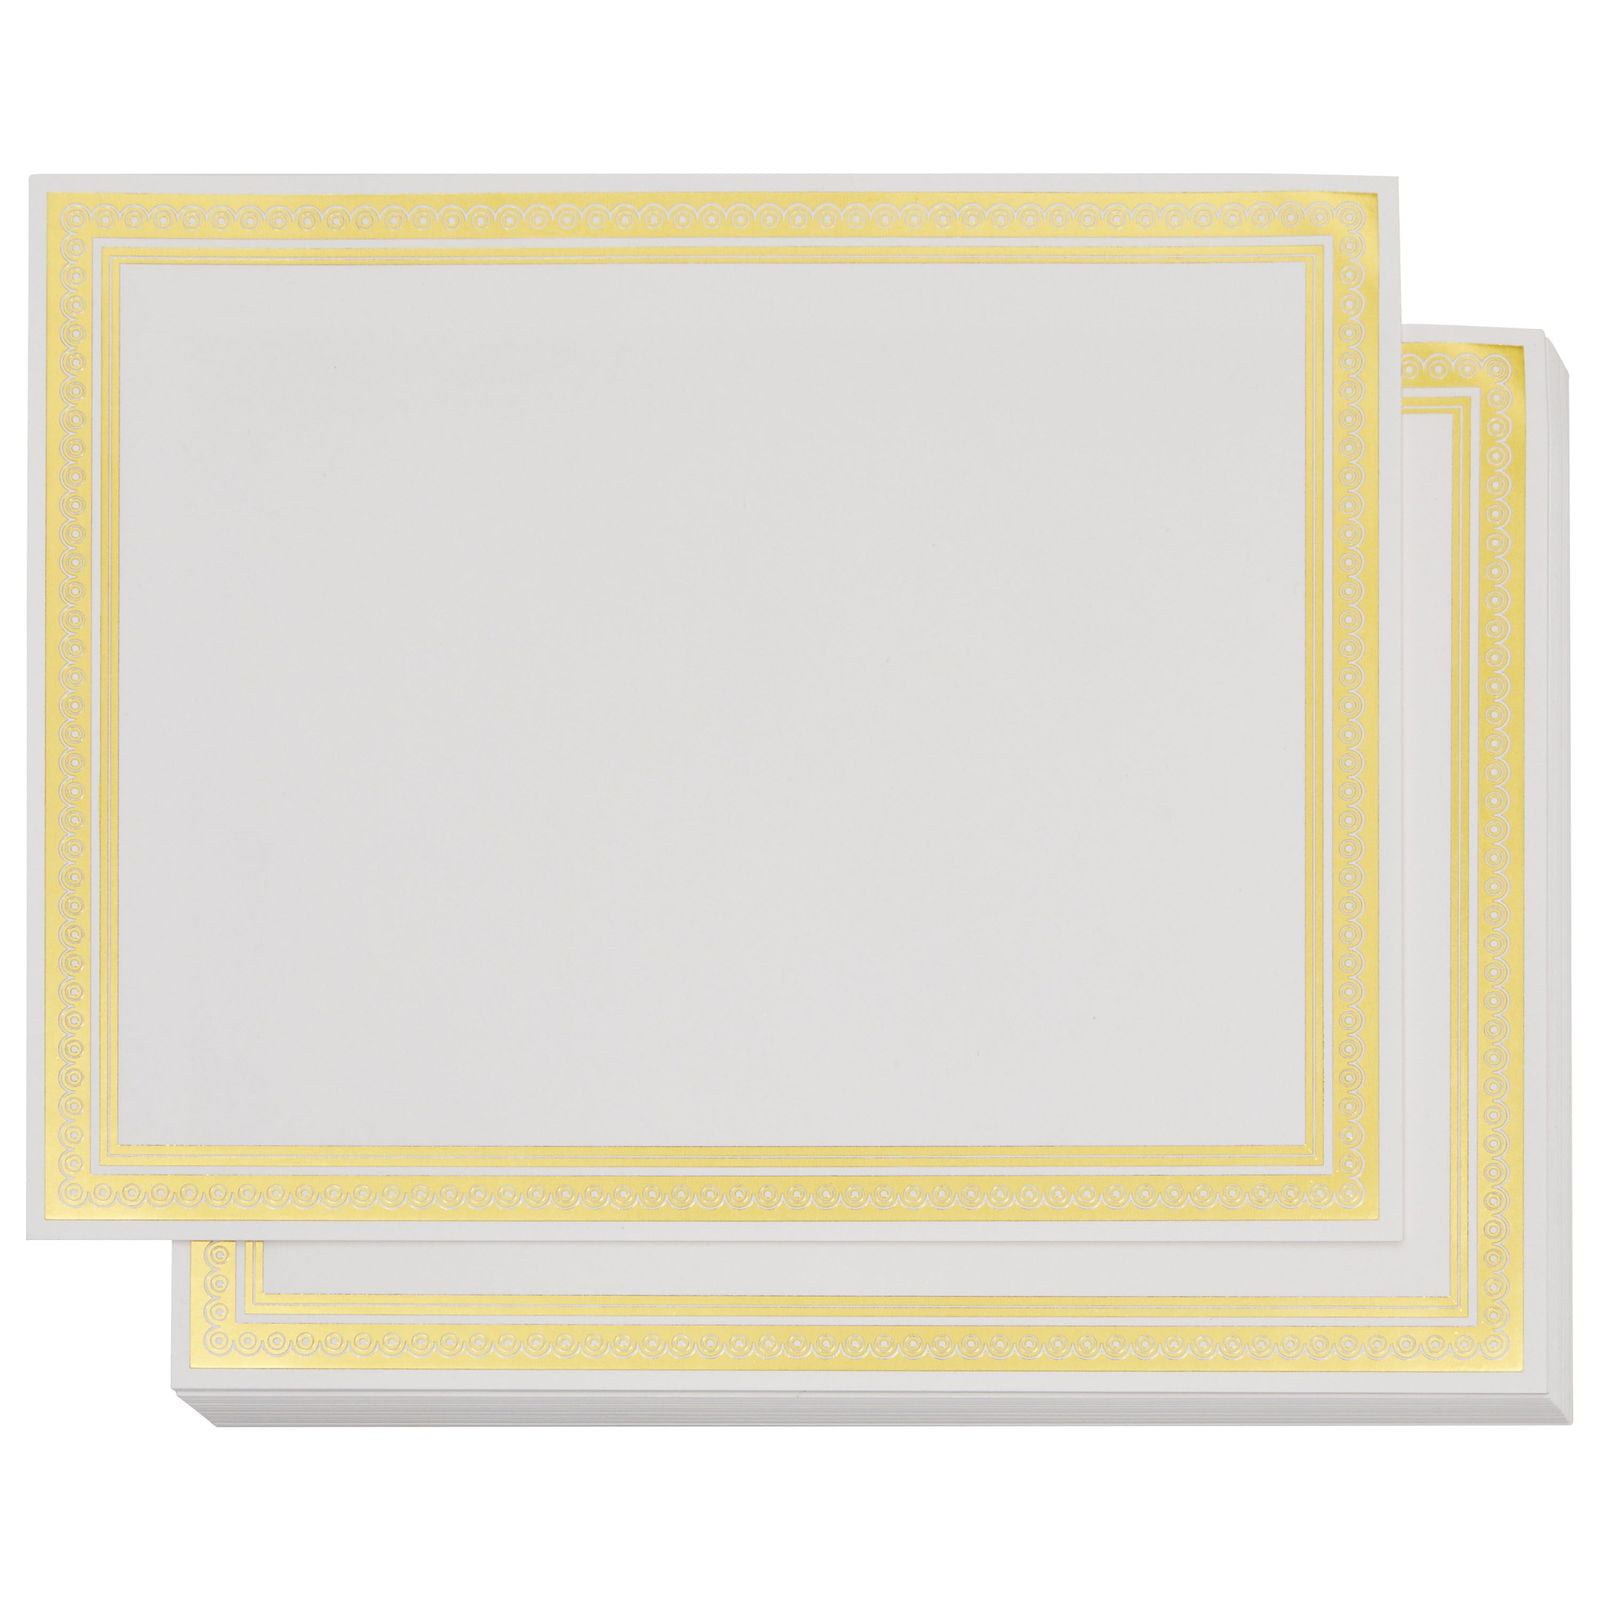 50 Professional Award Certificate Paper 8.5 x 11 with Seals Inkjet Printable Gold Foil Border Laser Blank 